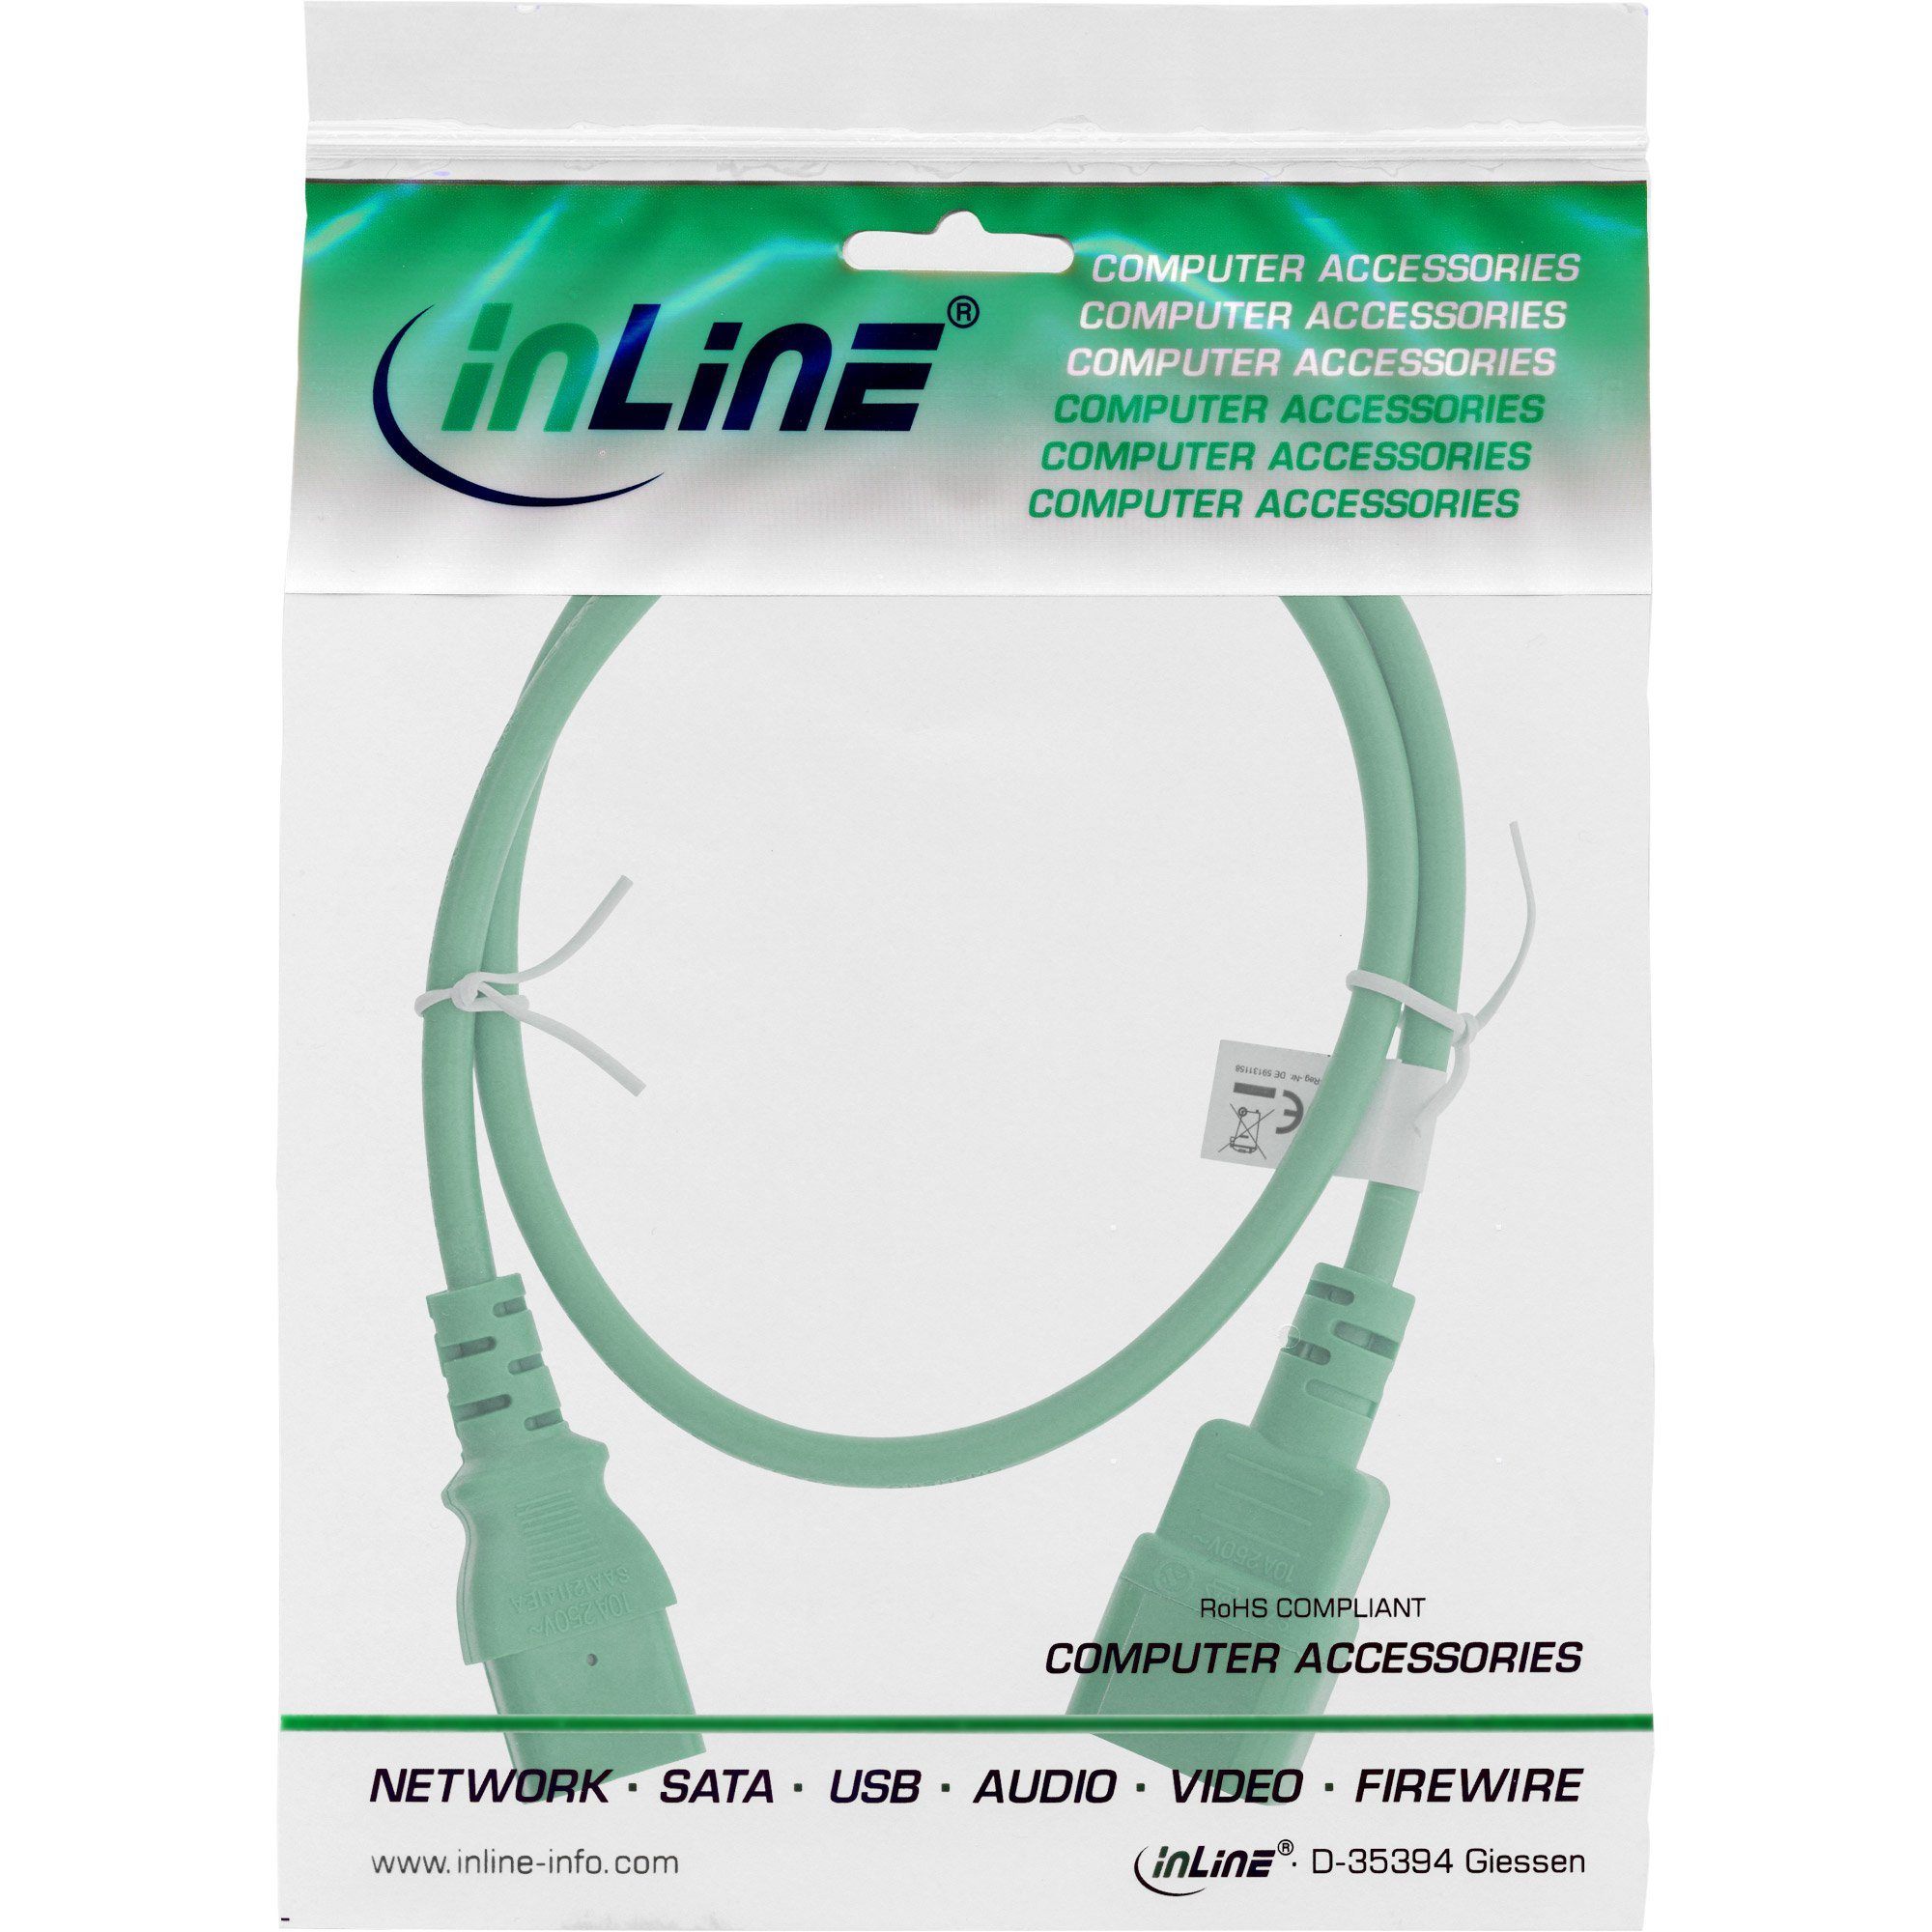 Kaltgeräteverlängerung, AG ELECTRONIC Stromkabel 0,5m auf C13 InLine® INTOS grün, C14,